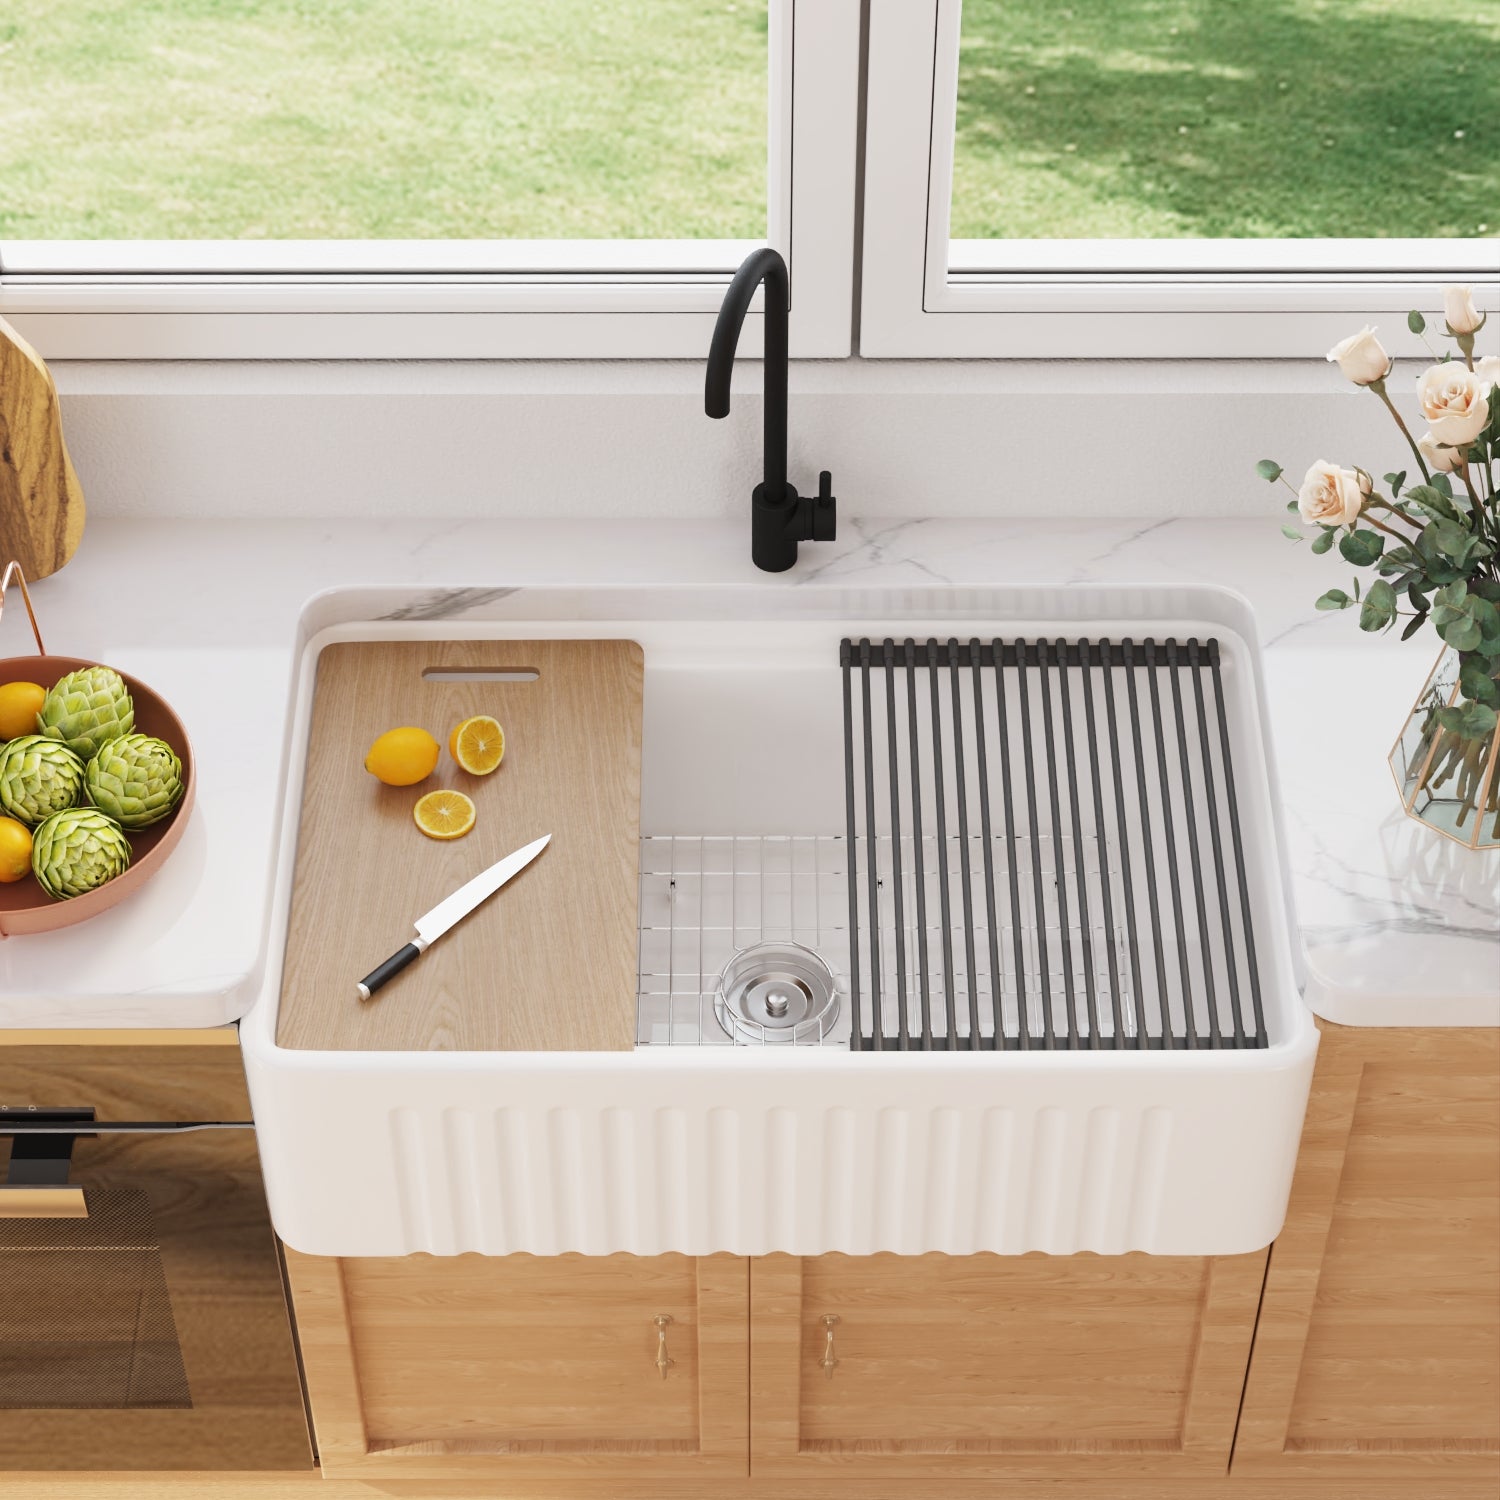 Sink Divider doing its work, simplifying your kitchen sink!! #workofar